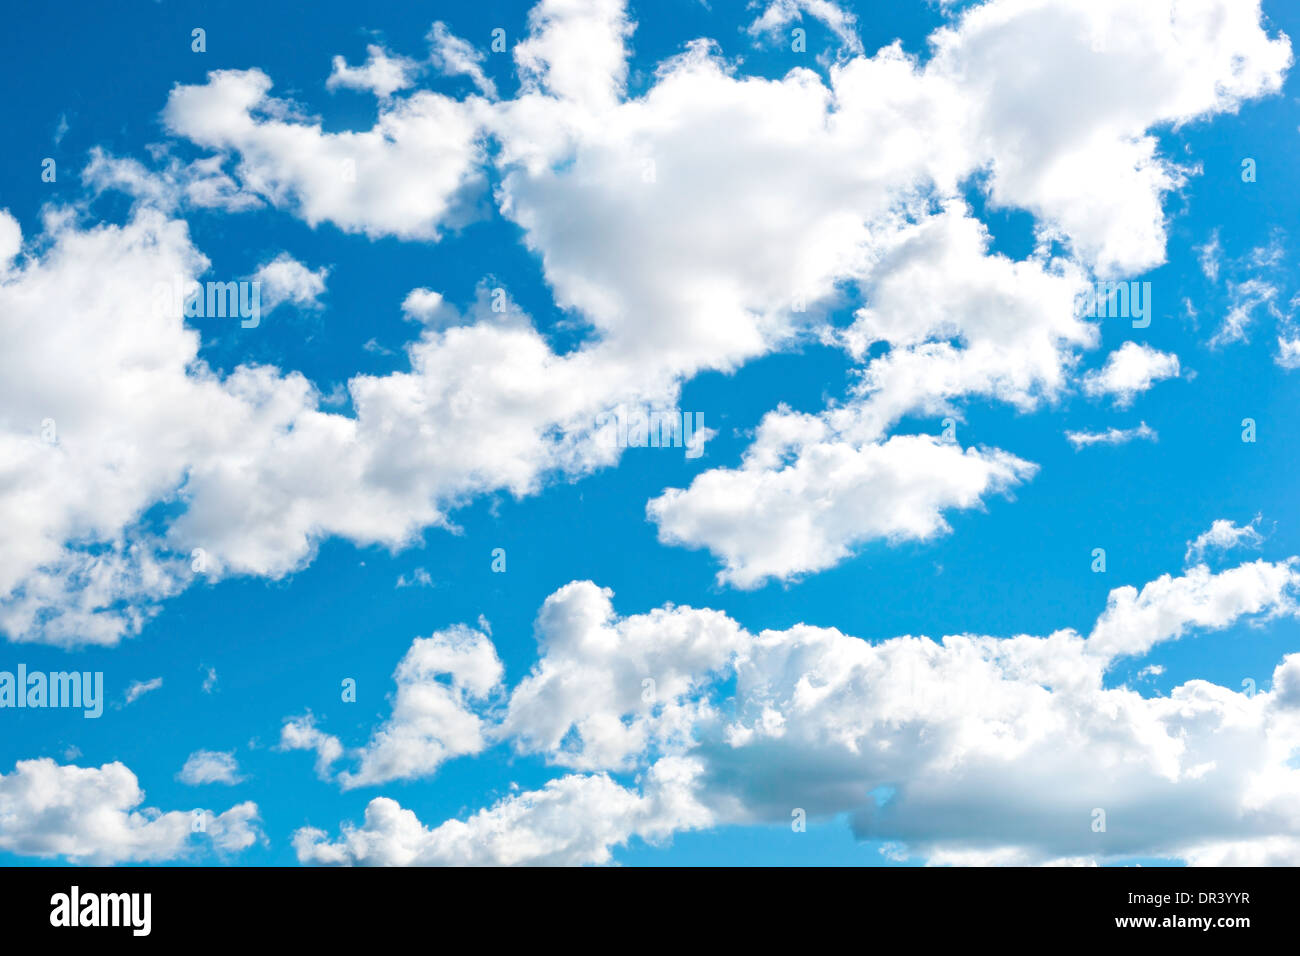 Cloudly Himmelshintergrund Stockfoto